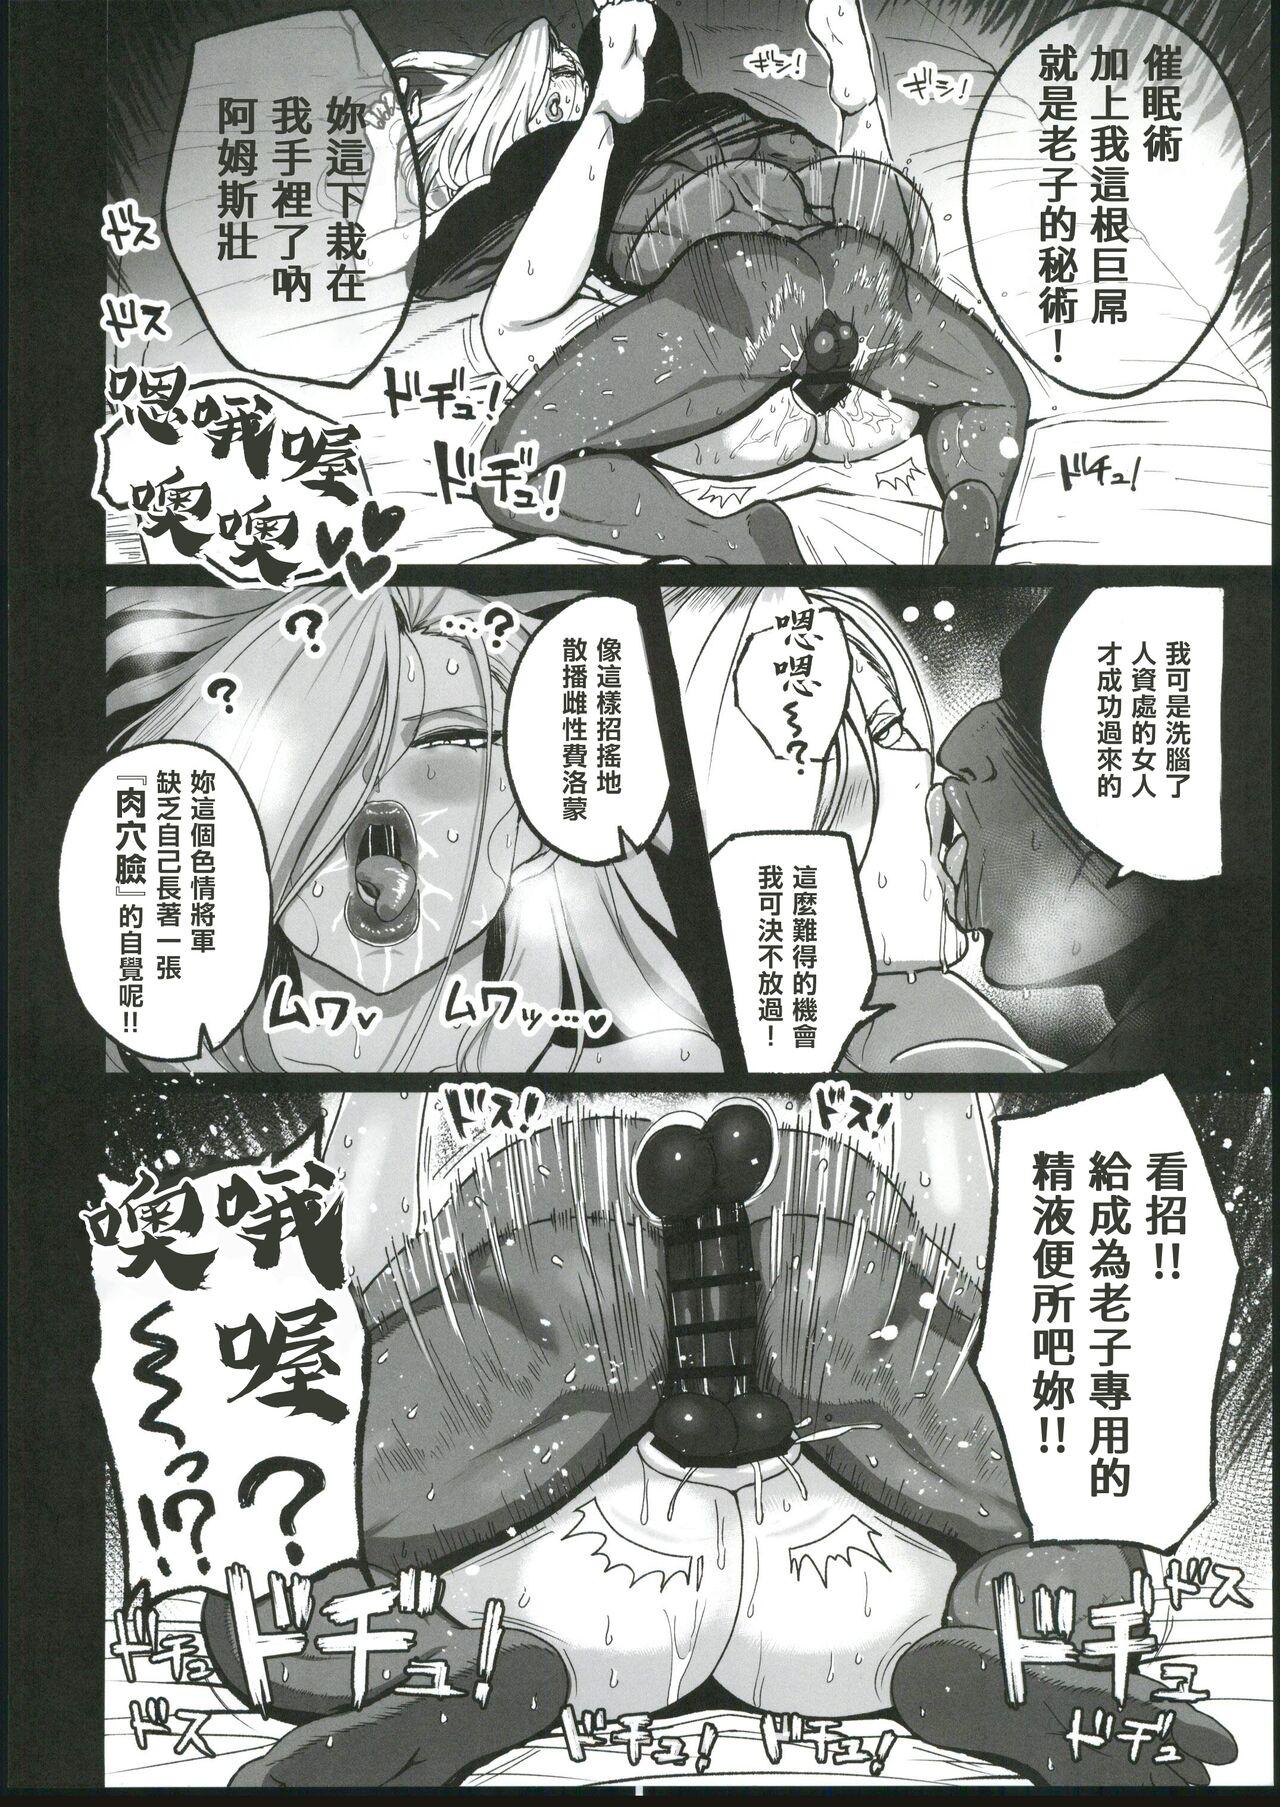 Tugging Jukujo Shougun VS Saimin no Renkinjutsushi - Armstrong VS Hypnotic Alchemist - Fullmetal alchemist | hagane no renkinjutsushi Naked Sluts - Page 5